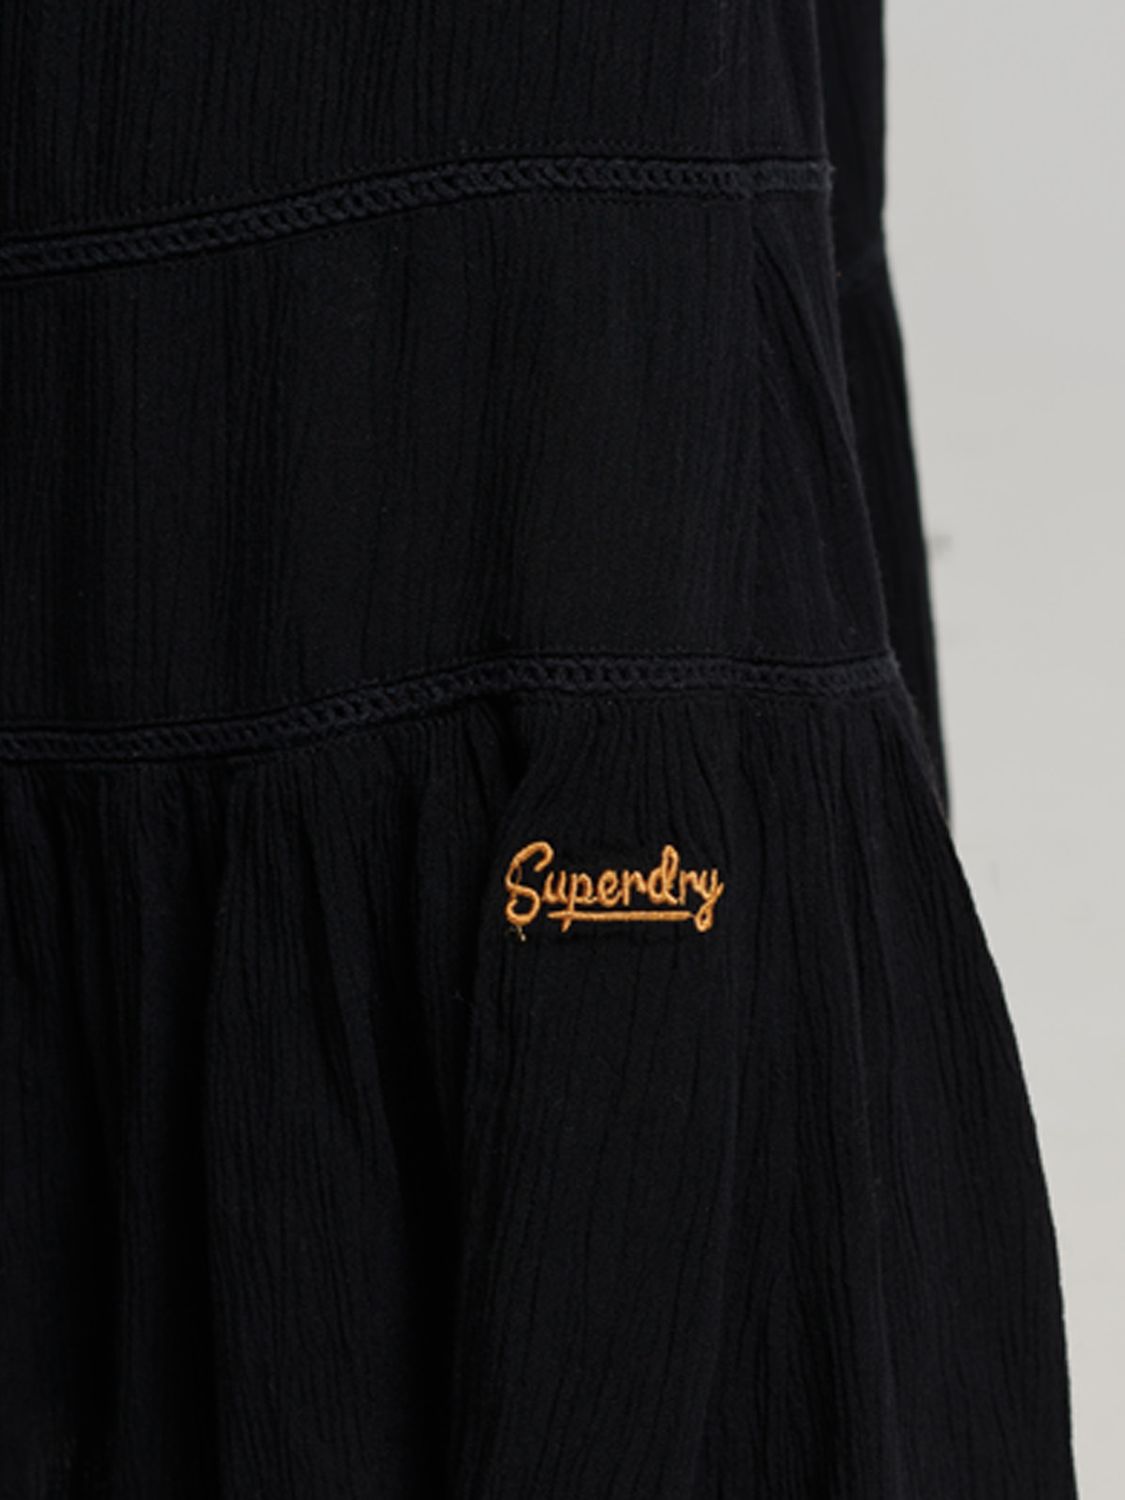 Superdry Long Beach Cami Dress, Jet Black, 8